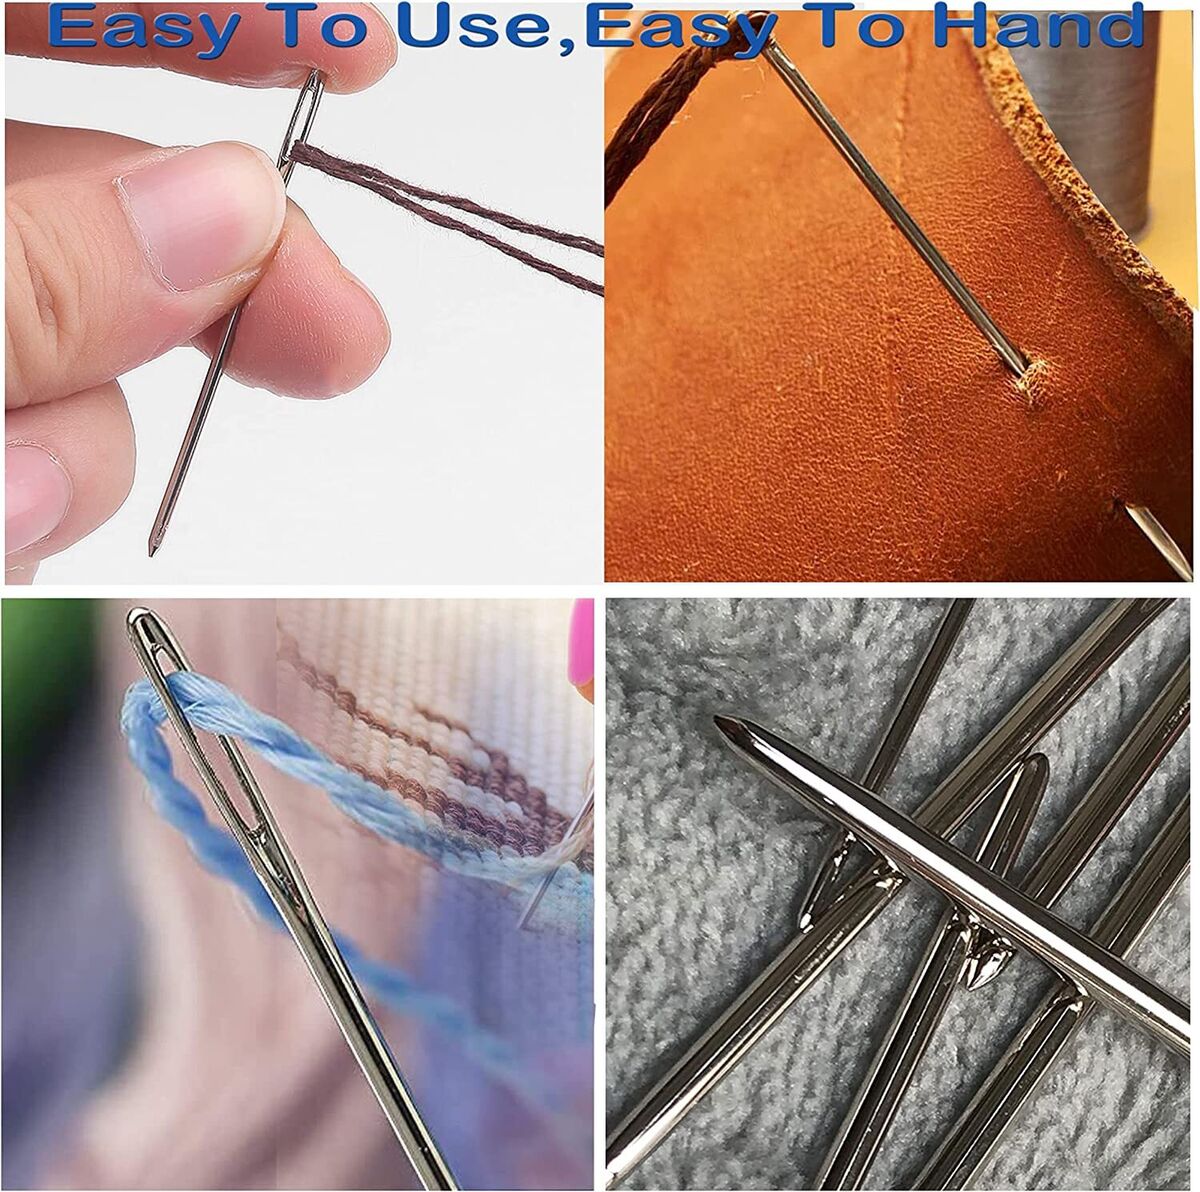 Large-Eye Blunt Needles, Stainless Steel Yarn Knitting Needles